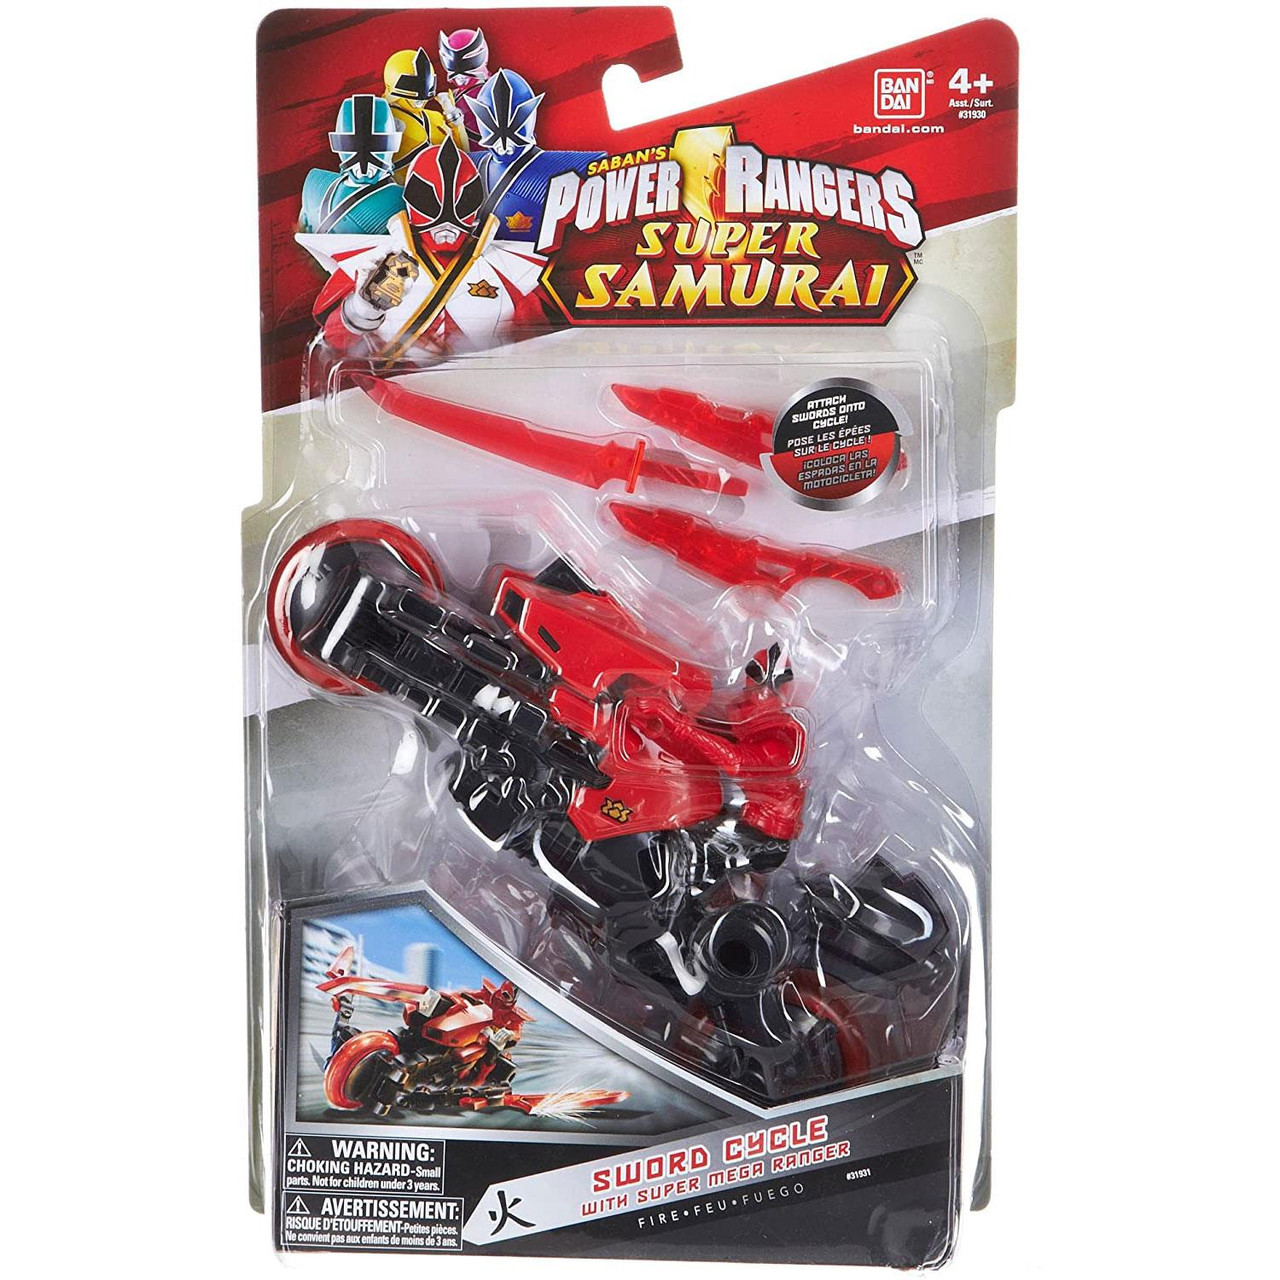 Power rangers super samurai red spin cycle bike & rider toy 